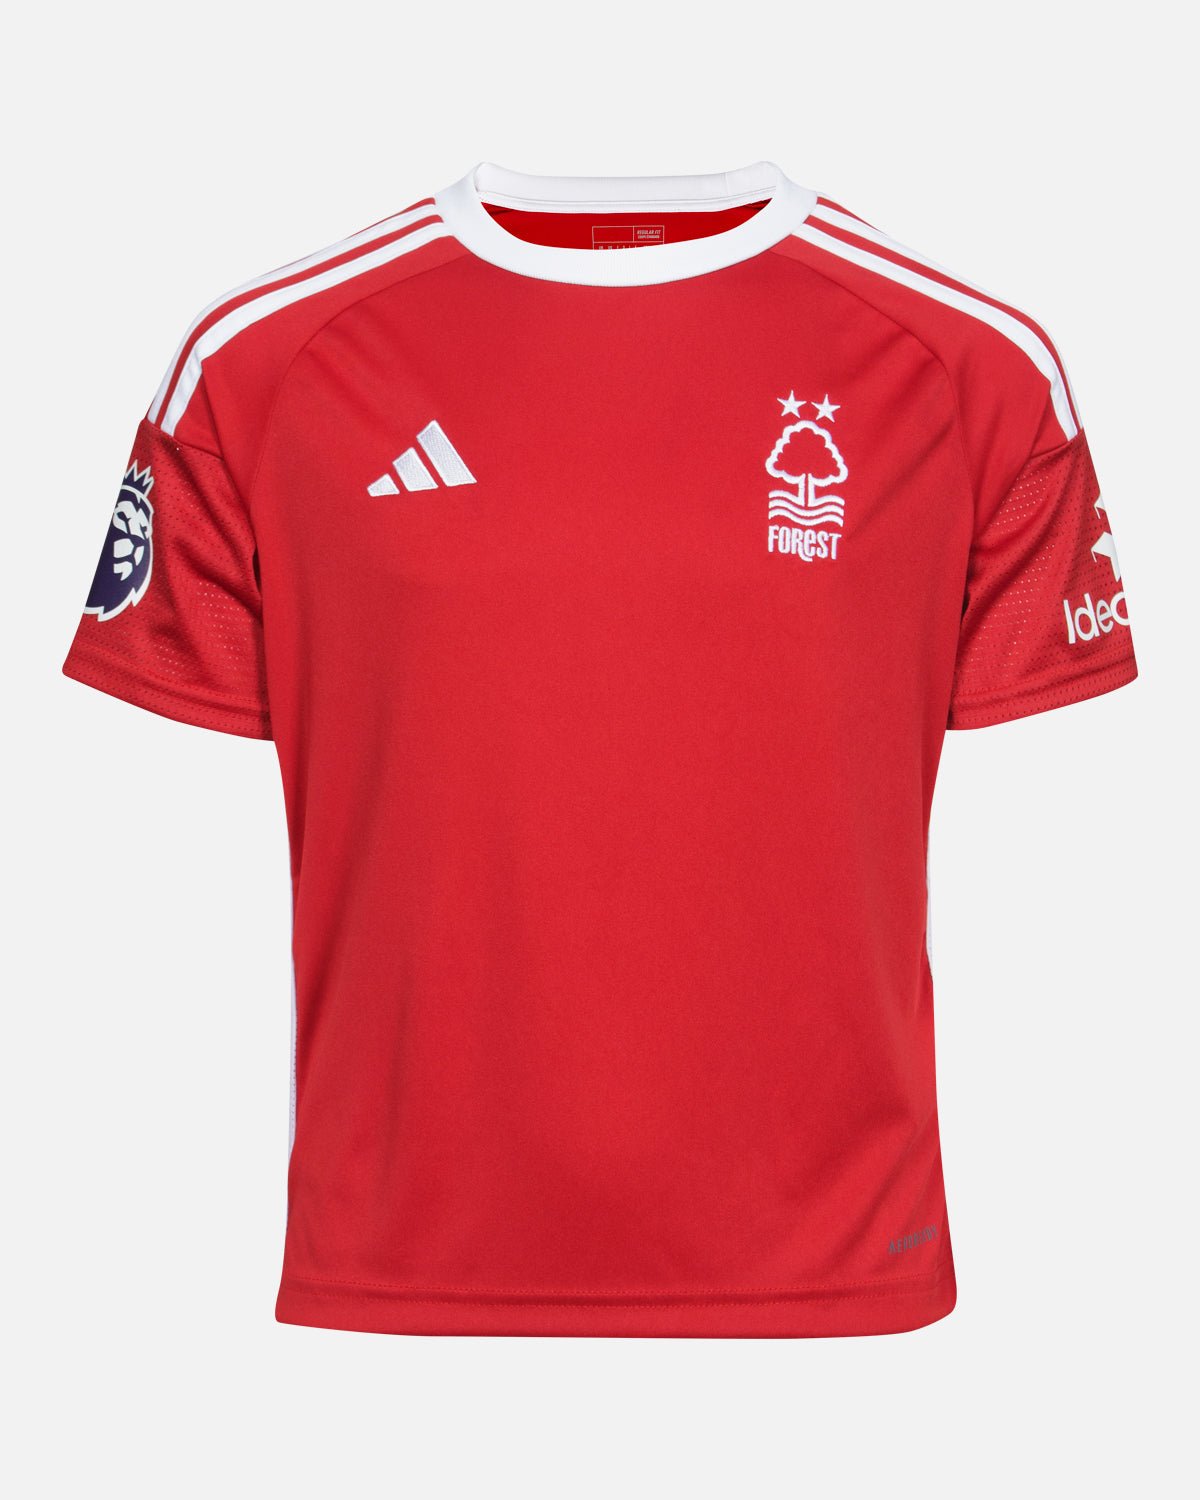 NFFC Junior Home Shirt 23-24 - Boly 30 - Nottingham Forest FC